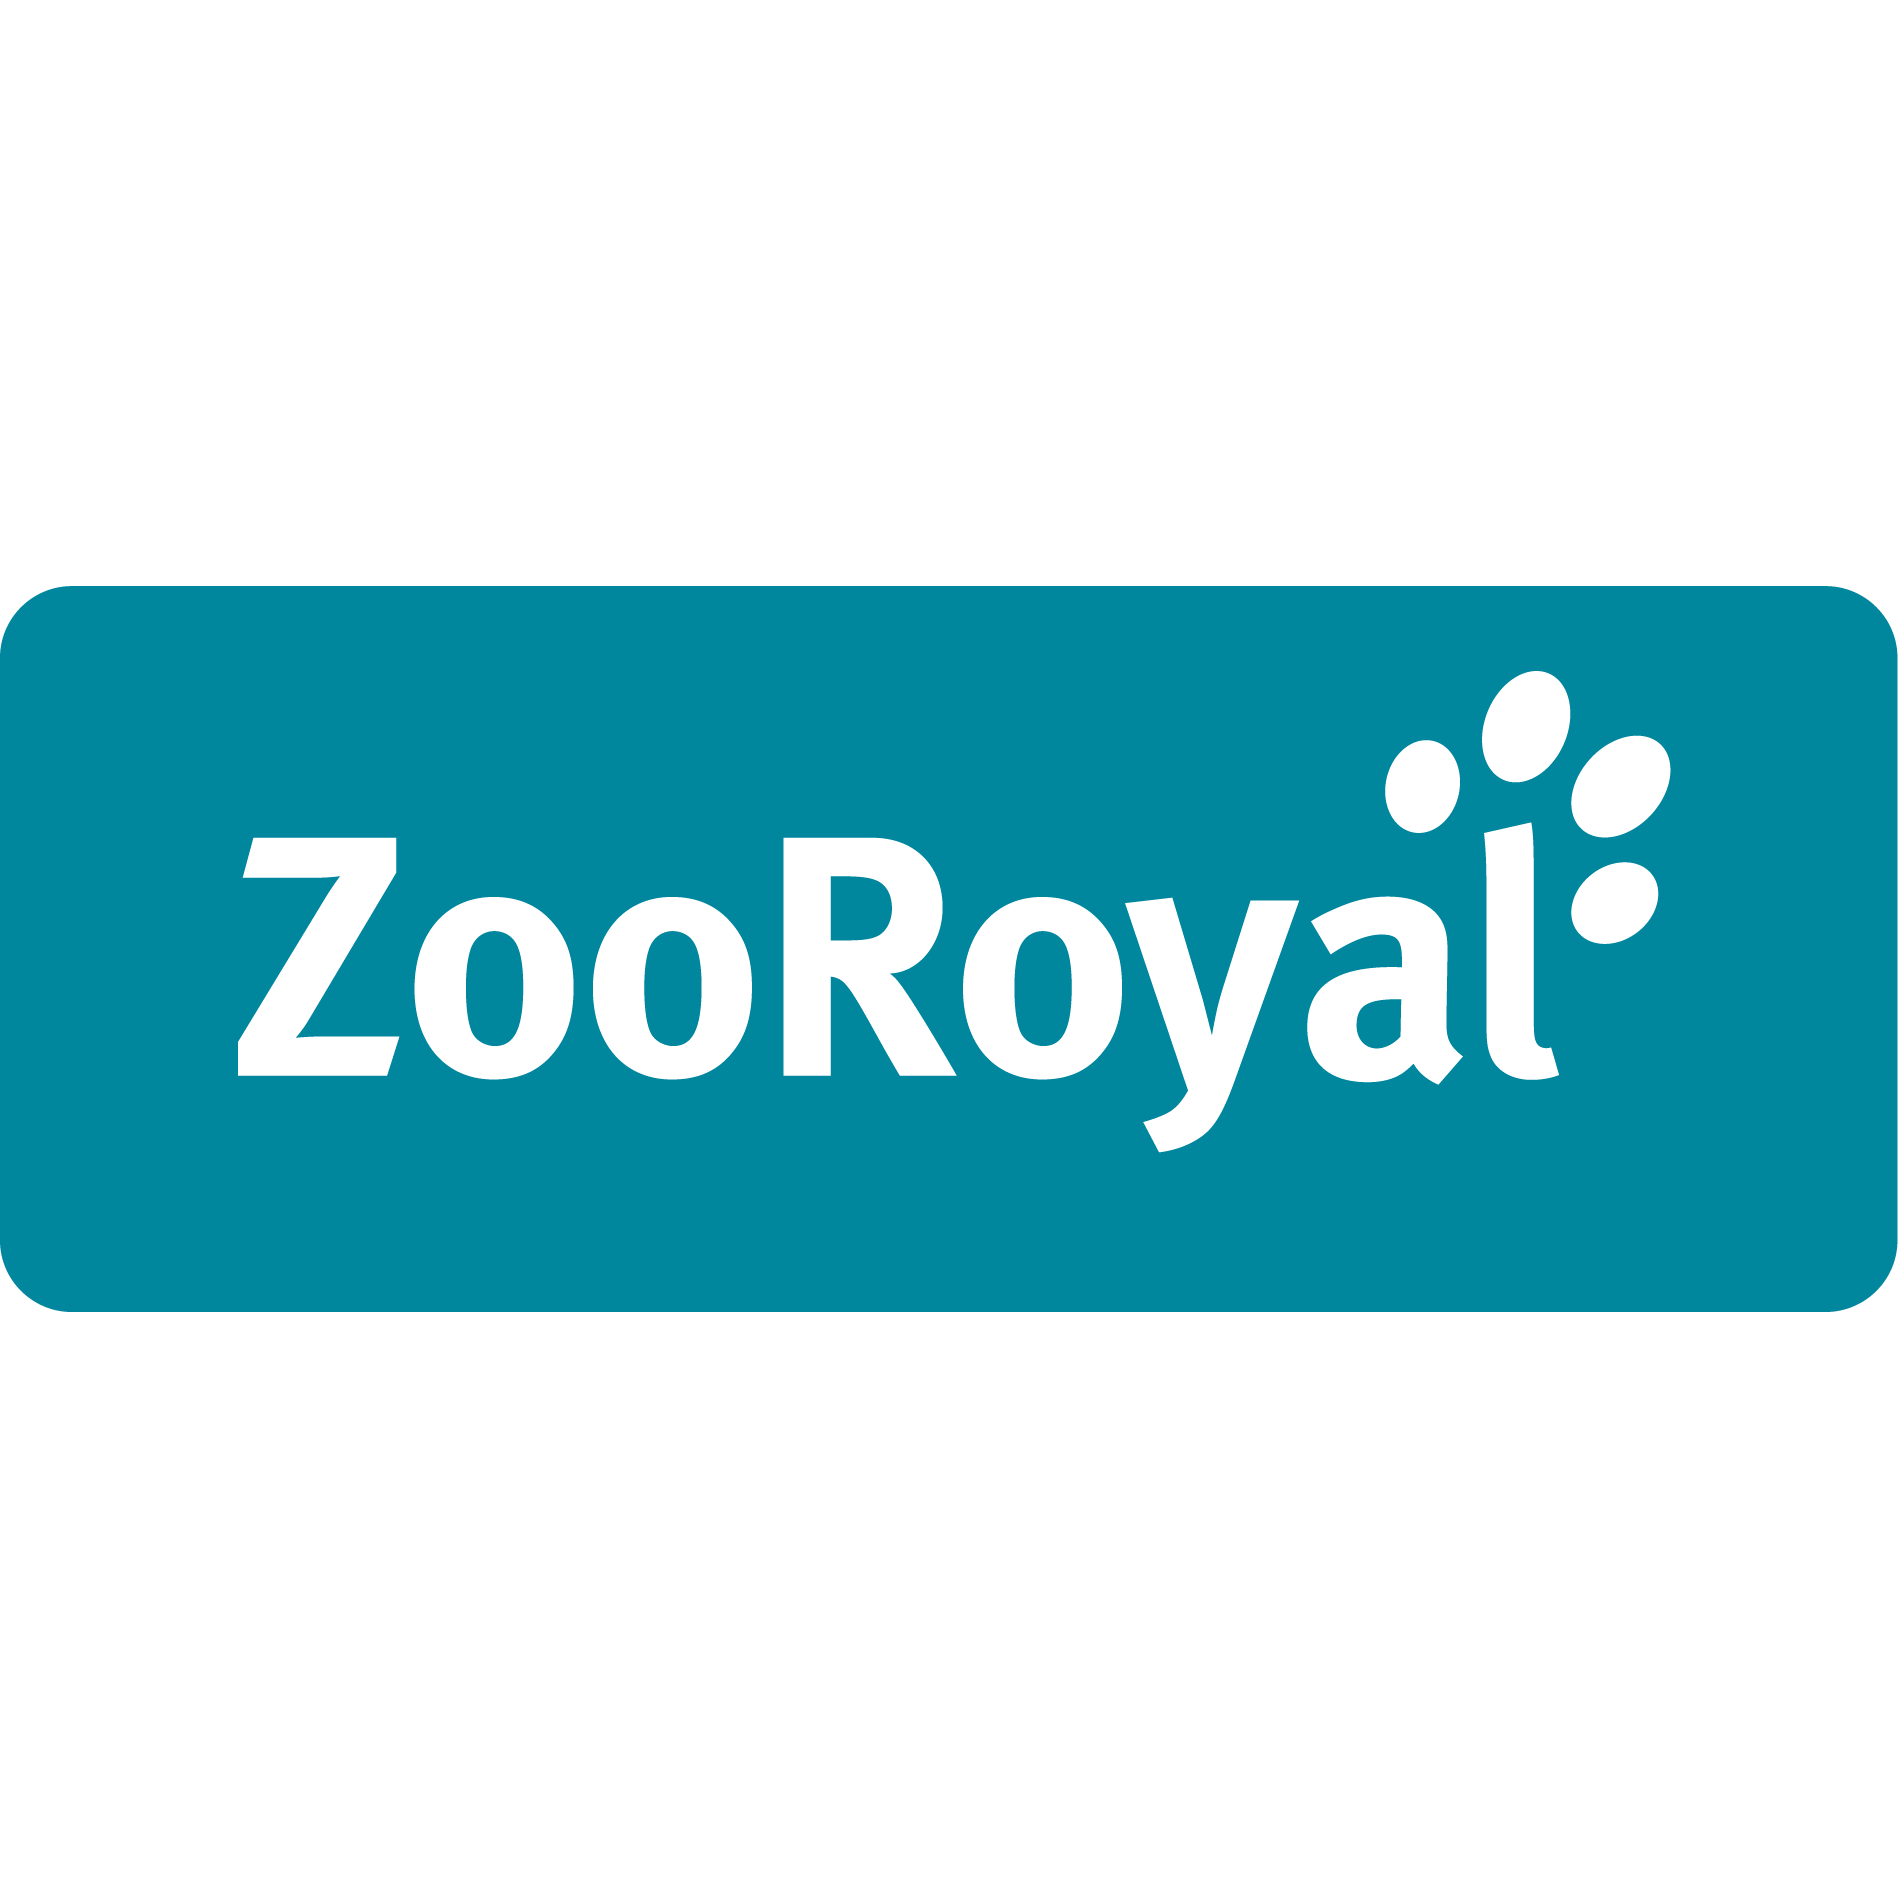 ZooRoyal in Elmshorn - Logo